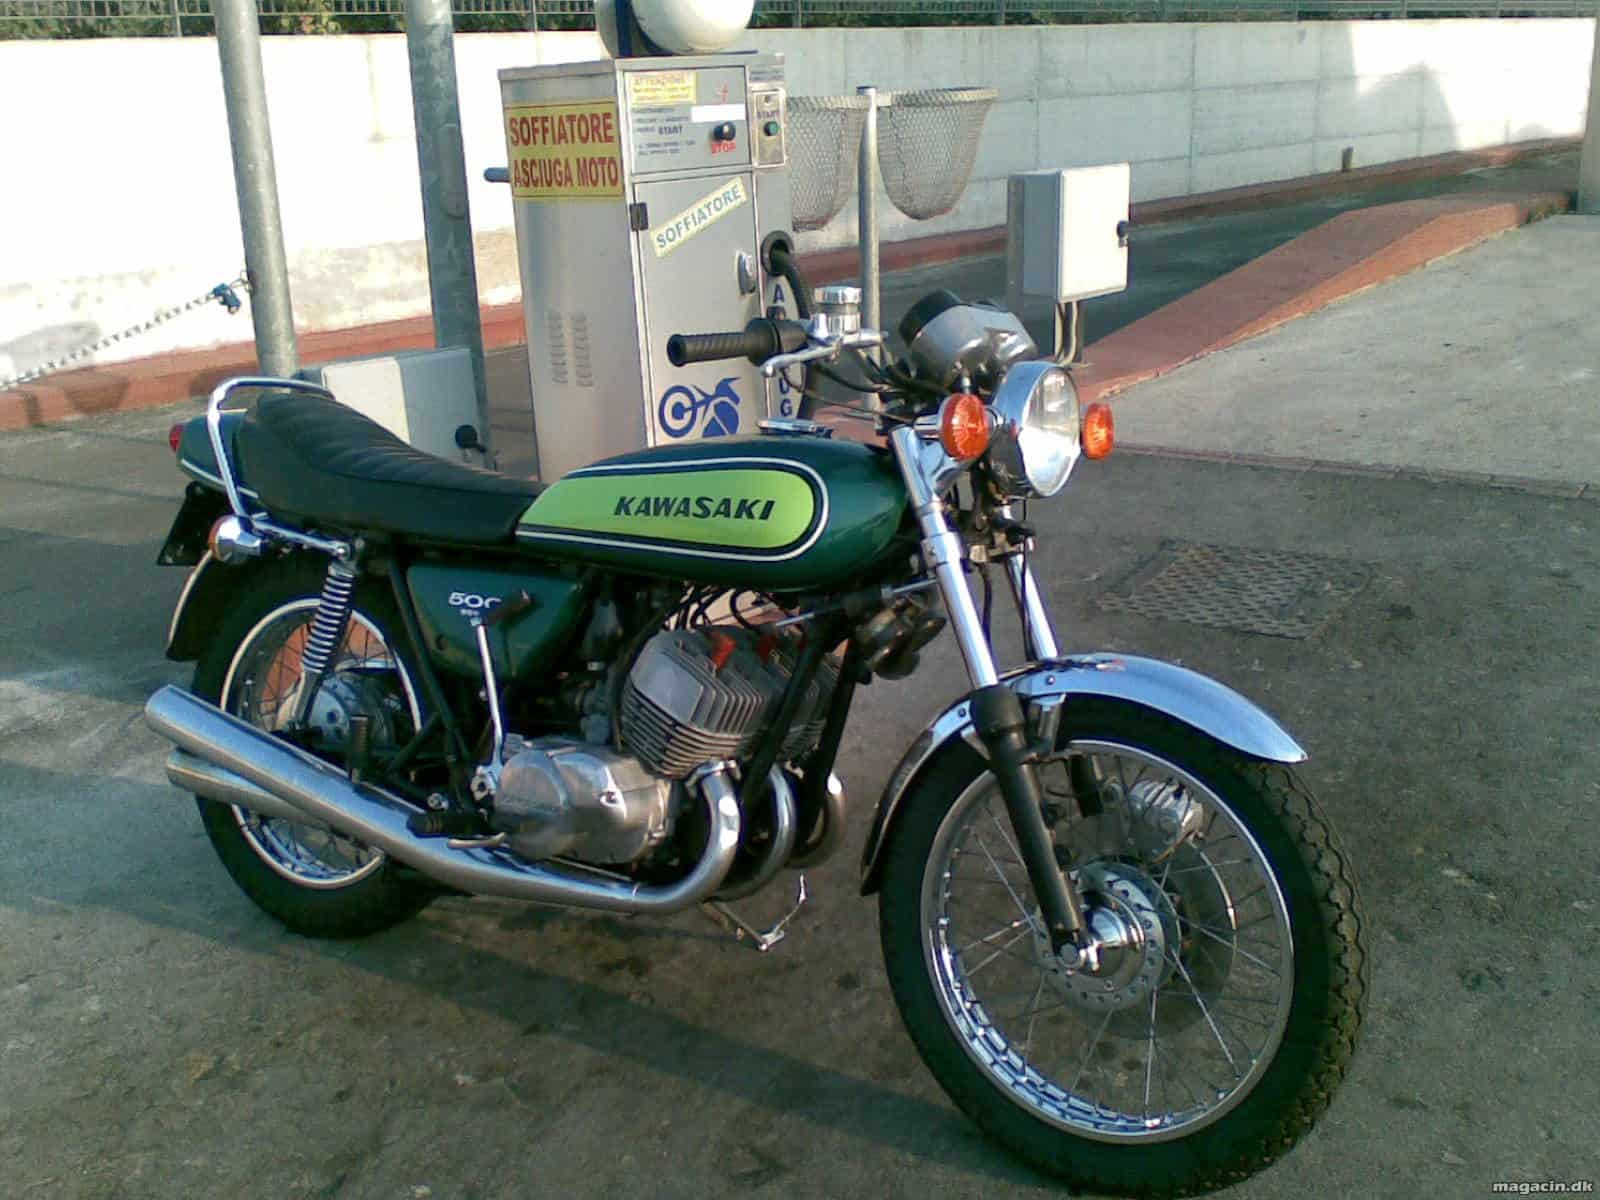 1969 kom Kawasaki med deres H1 MachIII 500ccm